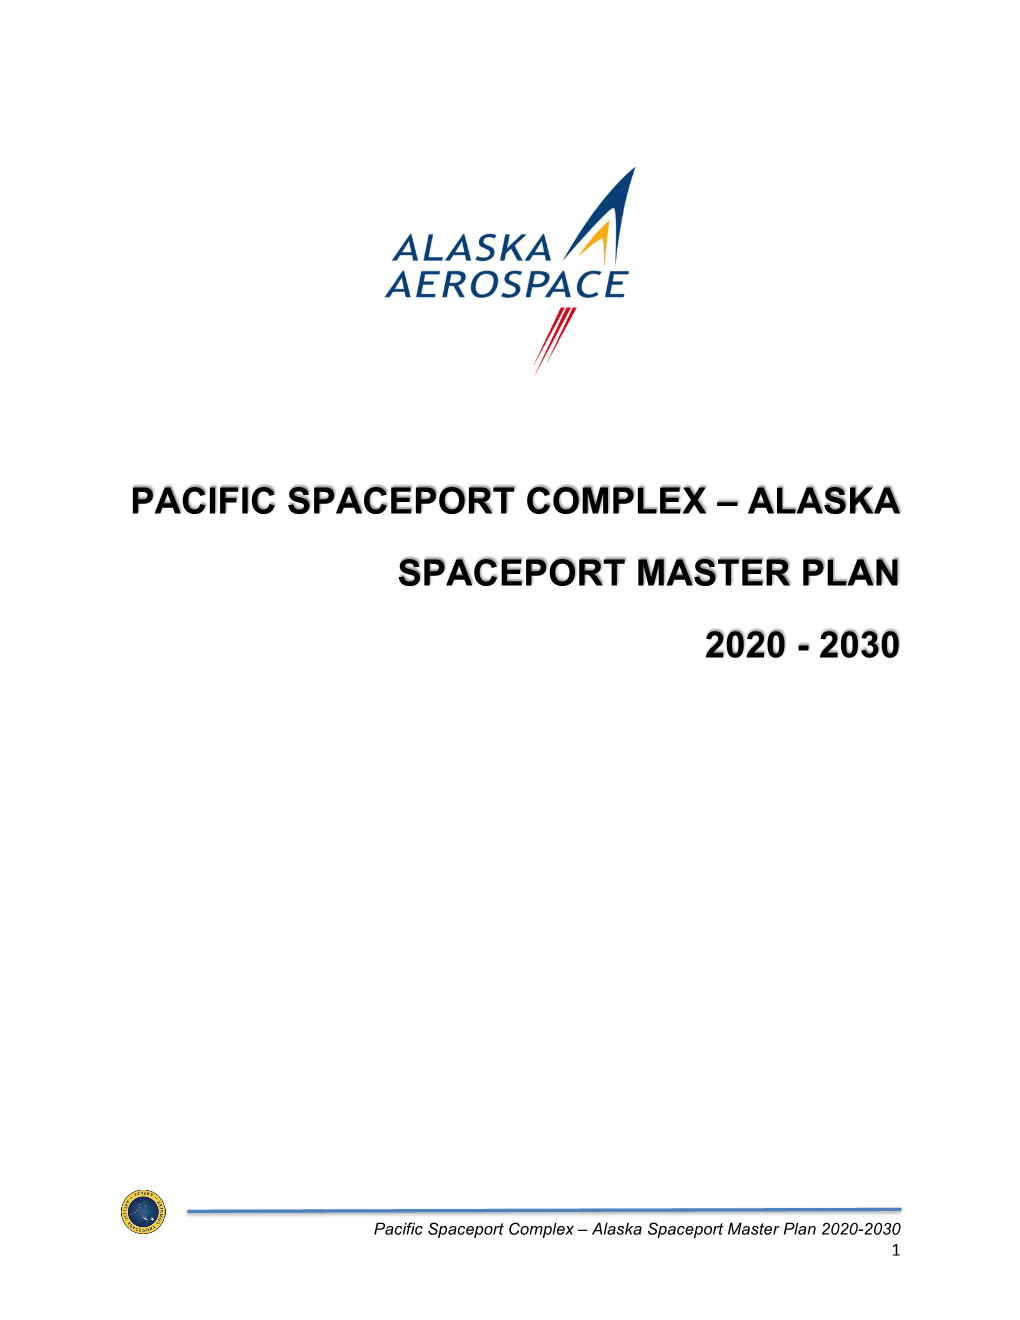 Alaska Spaceport Master Plan 2020 - 2030